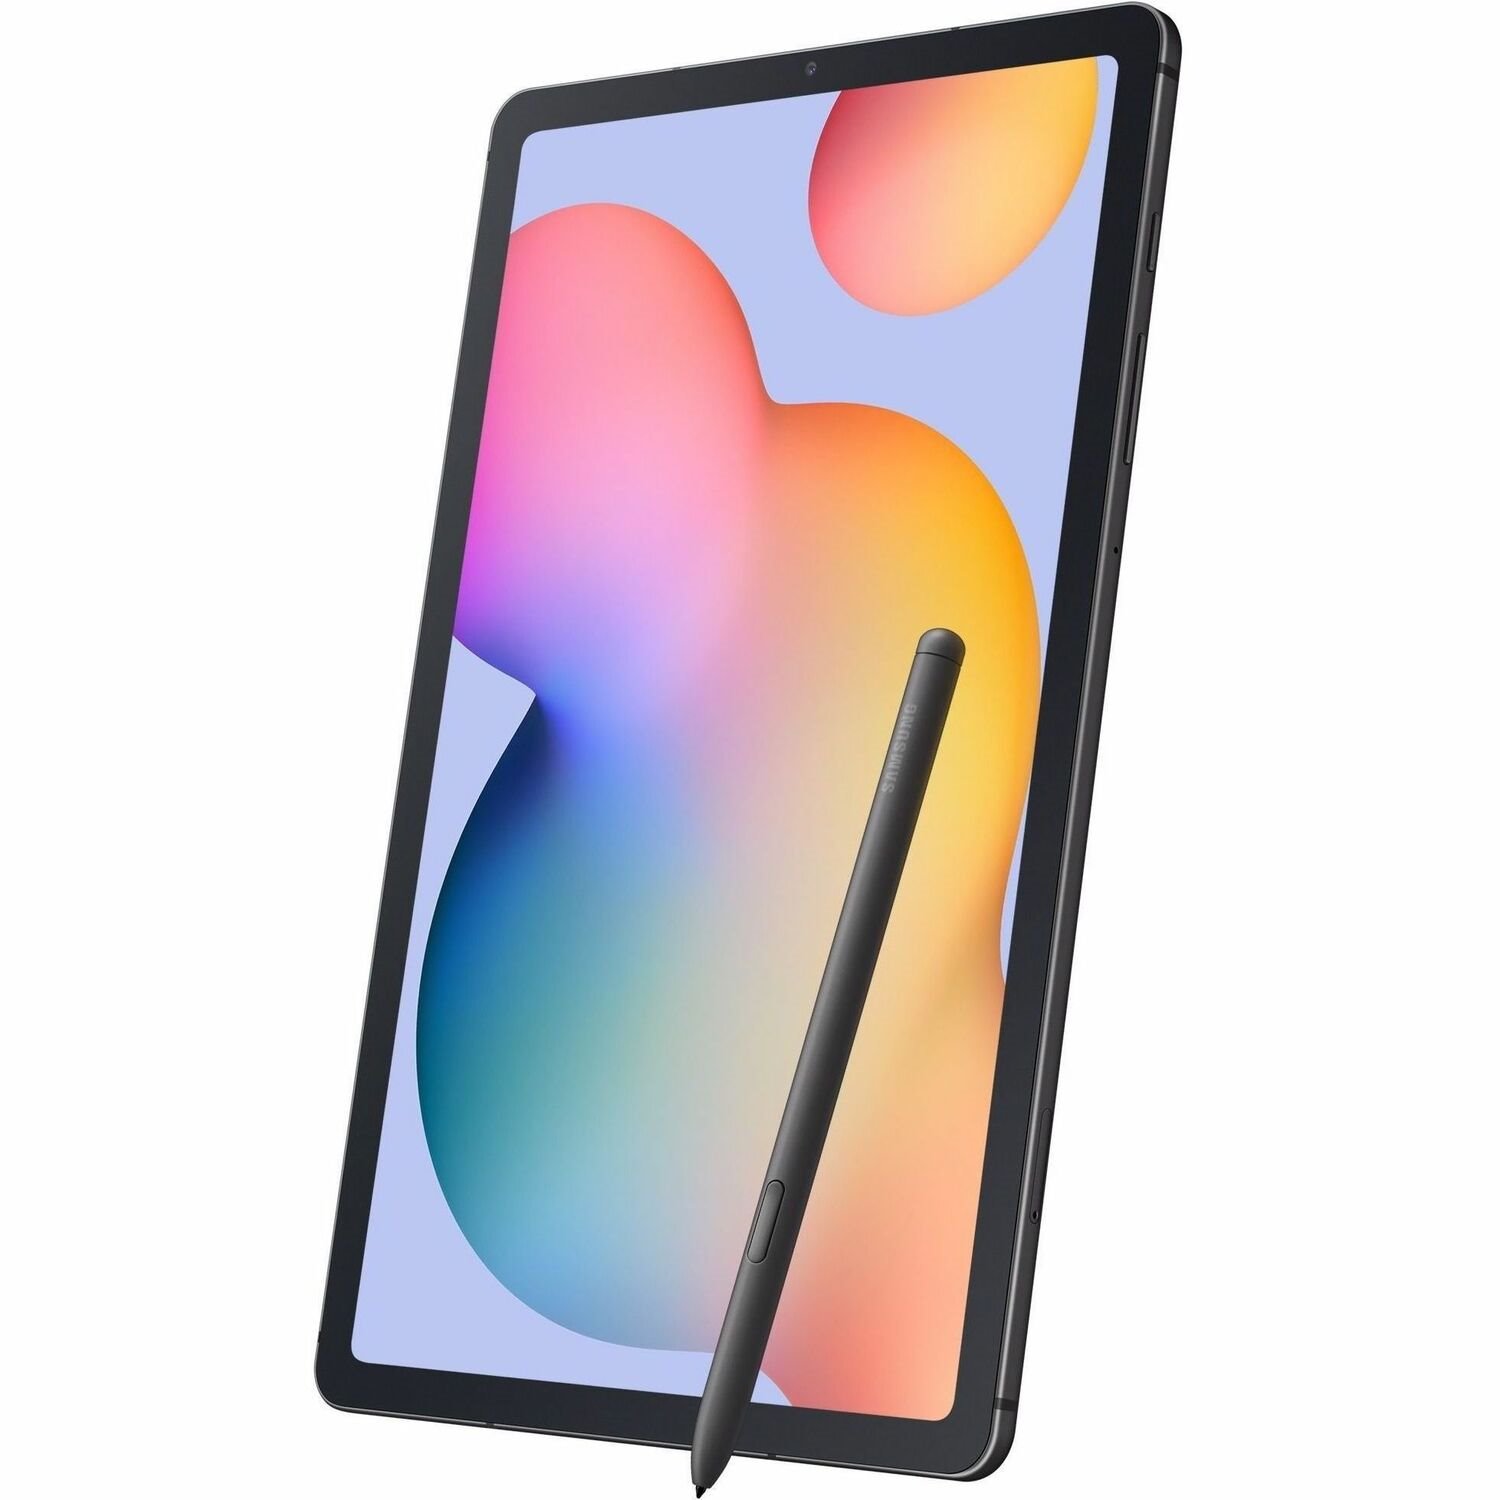 Samsung Galaxy Tab S6 Lite (2022 Edition) Tablet - 26.4 cm (10.4") WUXGA+ - Qualcomm SM7125 Snapdragon 720G Octa-core - 4 GB - 64 GB Storage - Oxford Gray